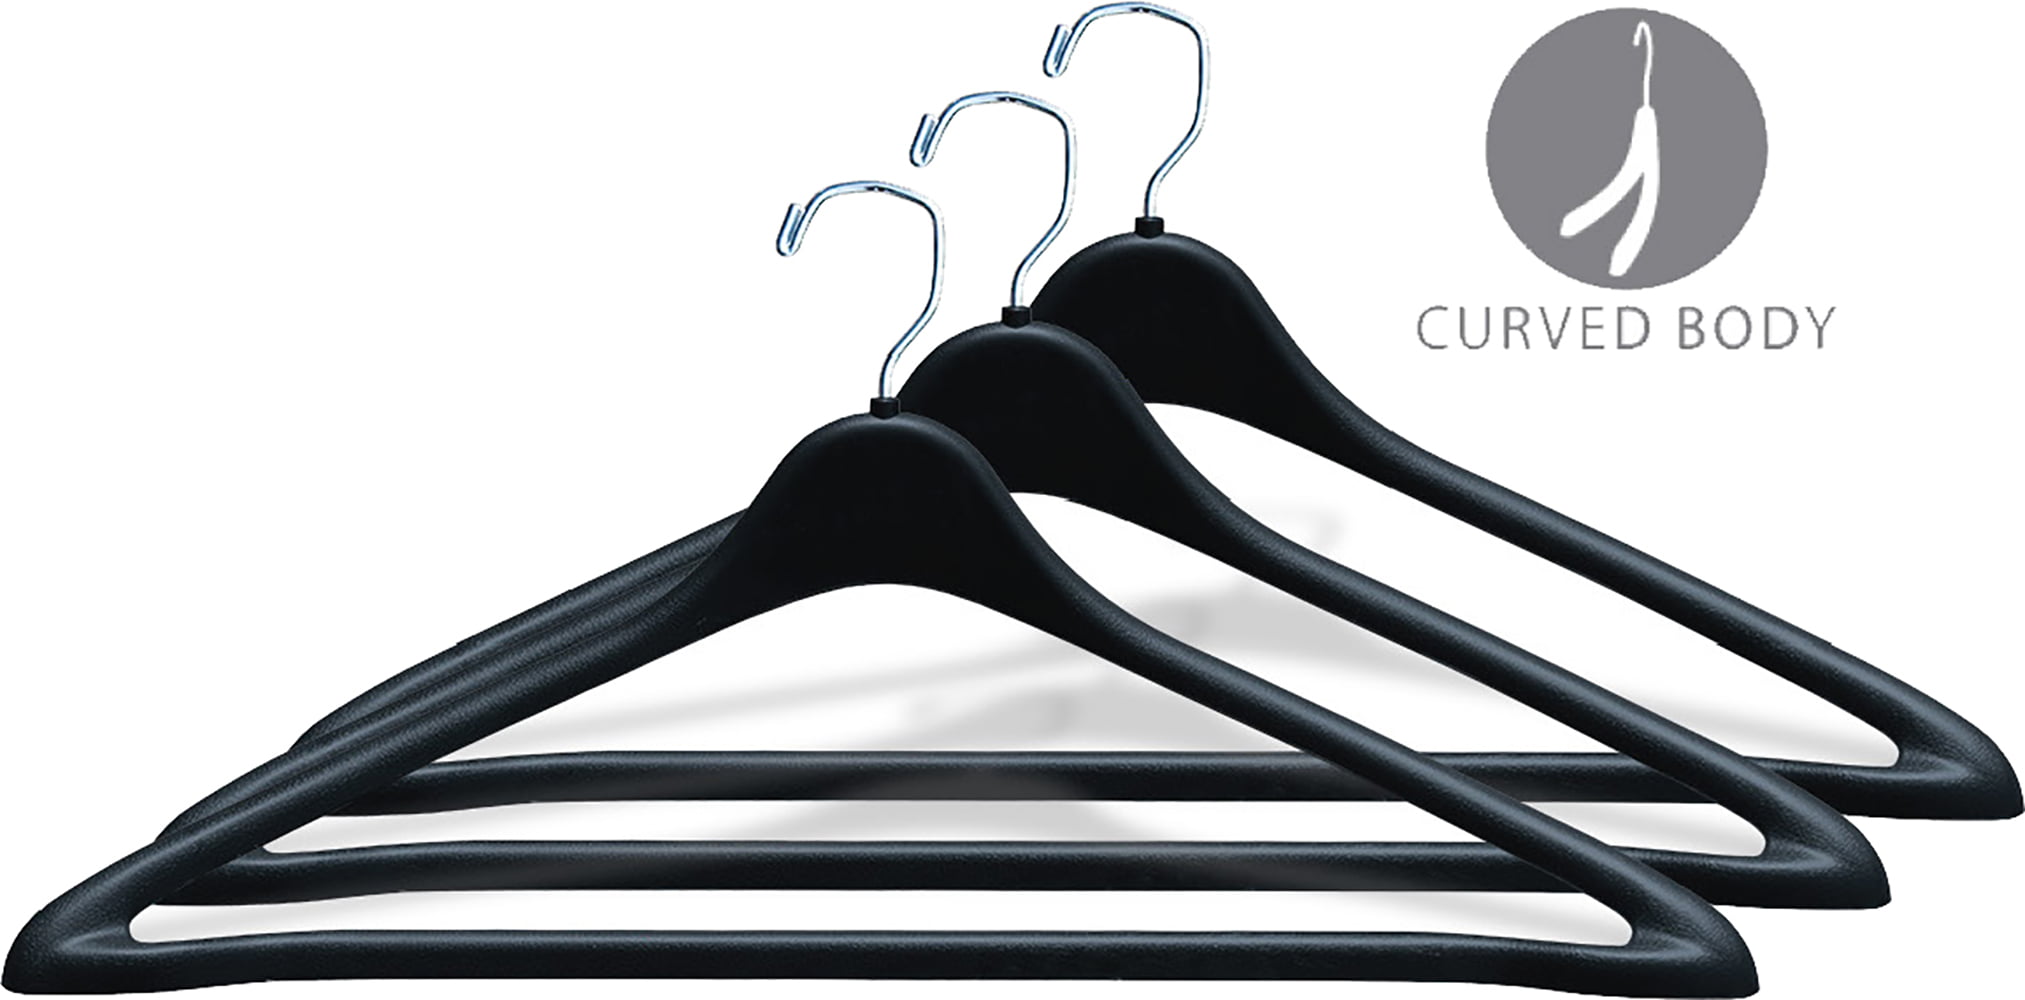 Plastic Suit Hangers OEM Extra Wide Shoulder Black Clothes Hangers